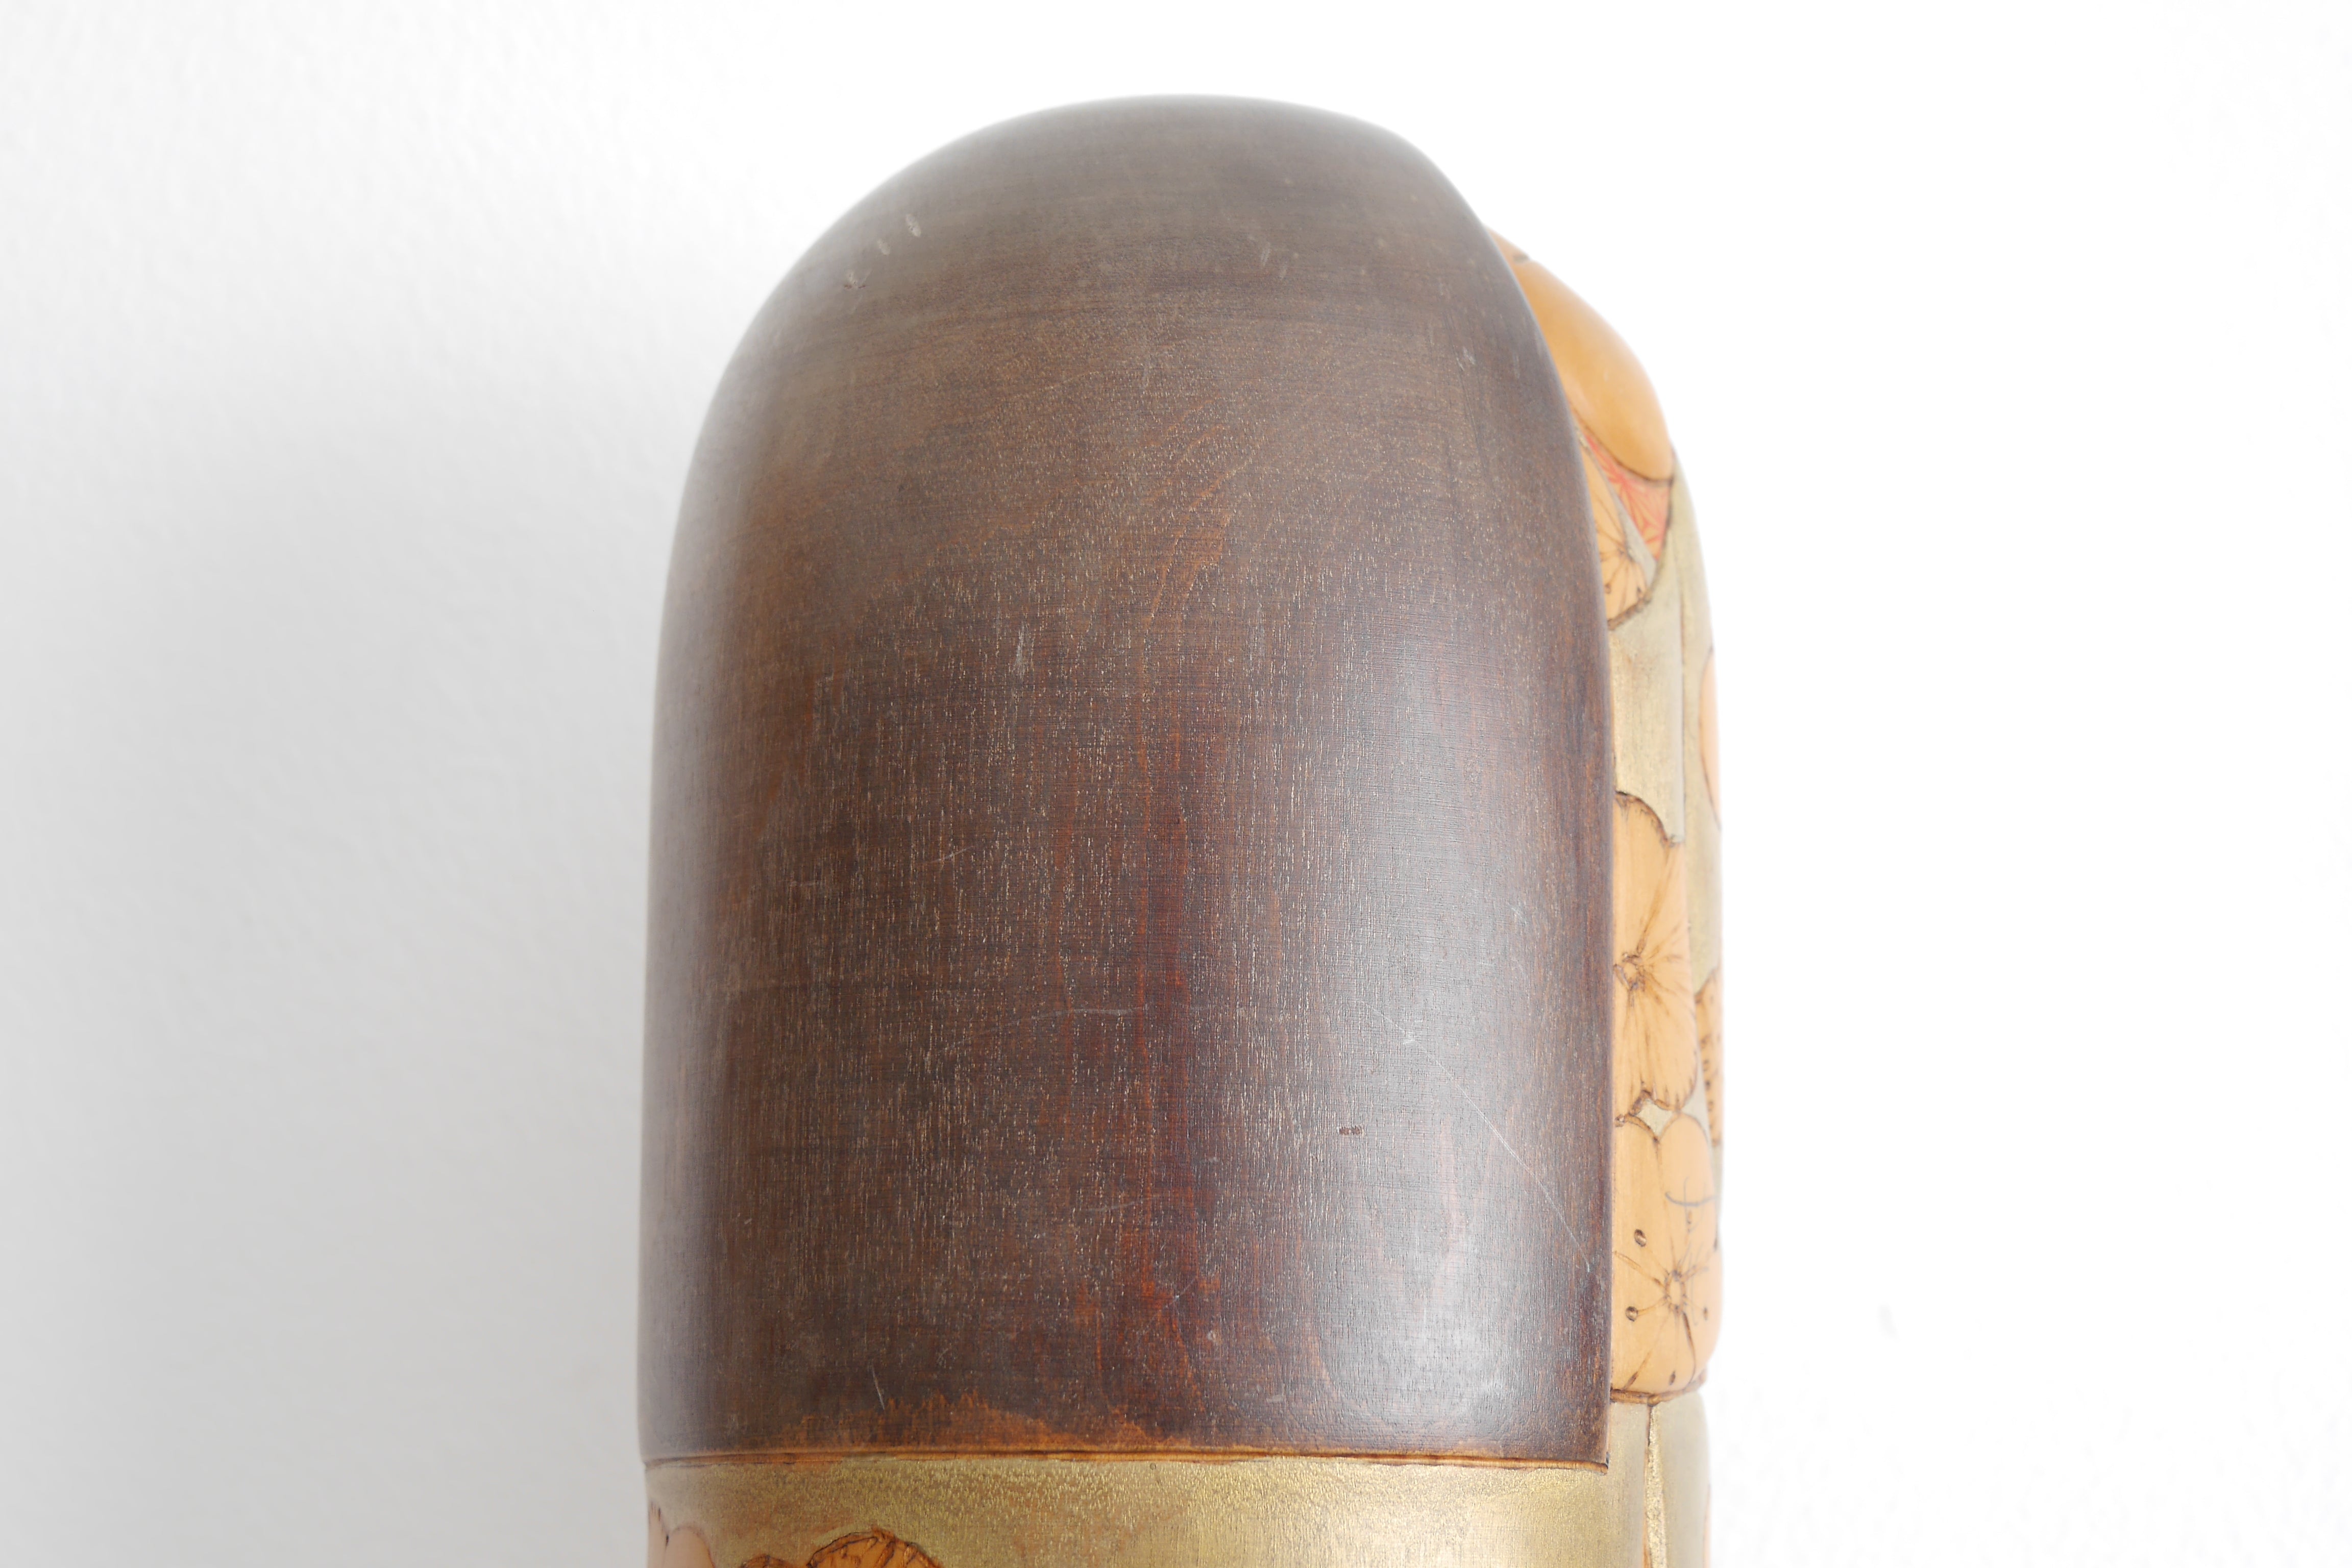 Exclusive Vintage Sosaku Kokeshi By Kato Tatsuo (1940-) | Titled: 'Umenokaori - Plum Fragrance' | Dated: 1986 | 29 cm